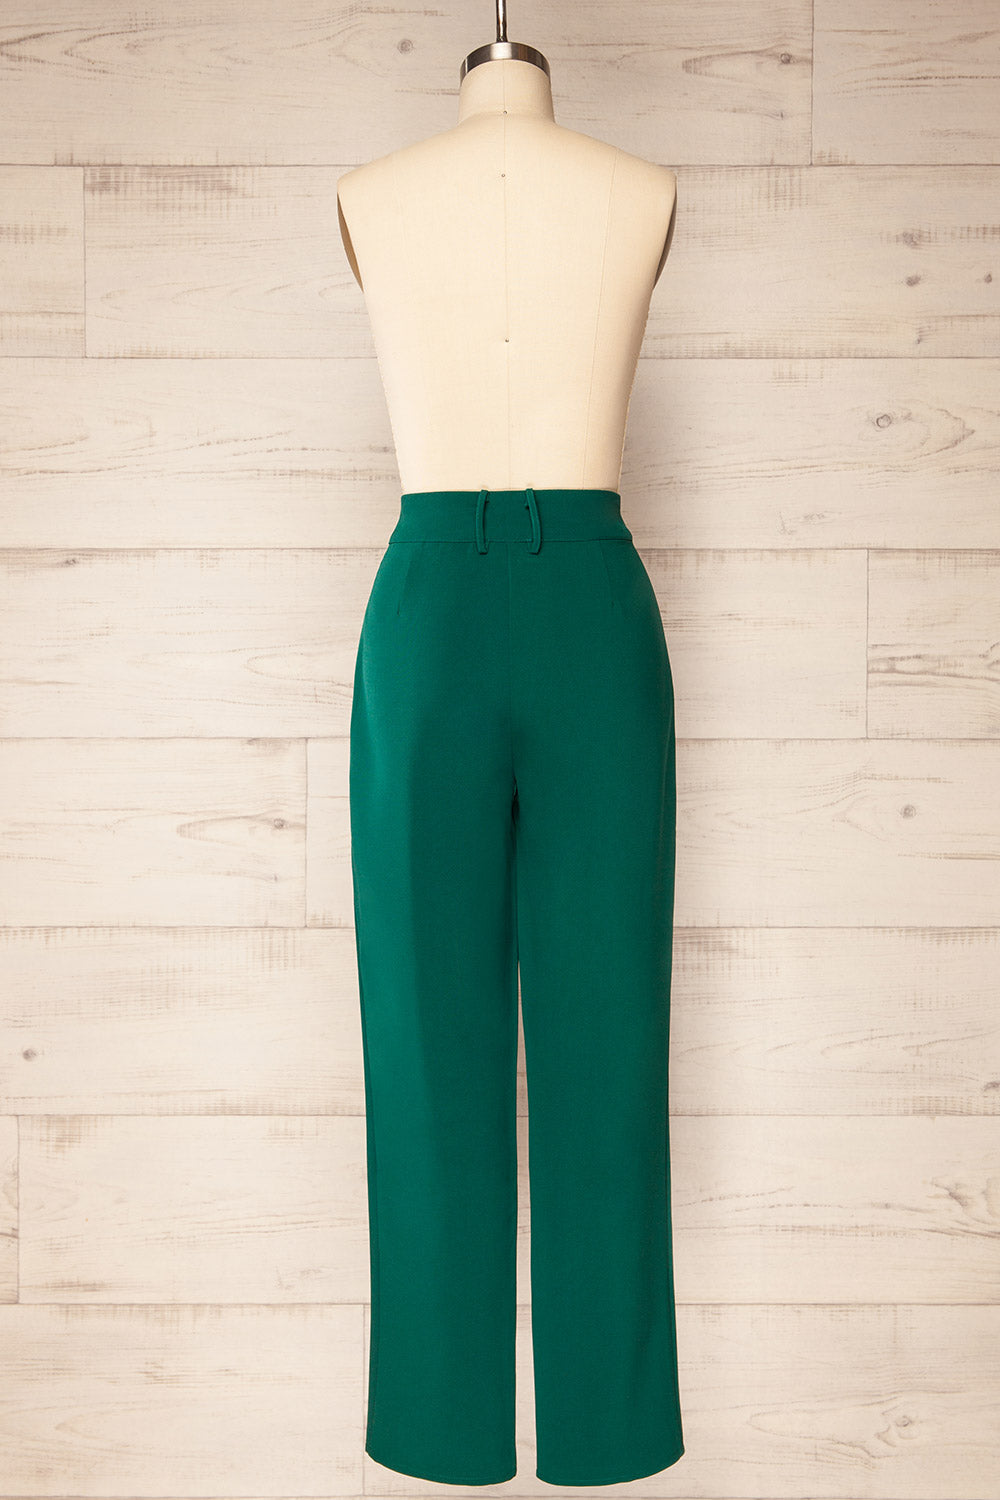 Bergonce High-Waisted Emerald Pants | La petite garçonne back view